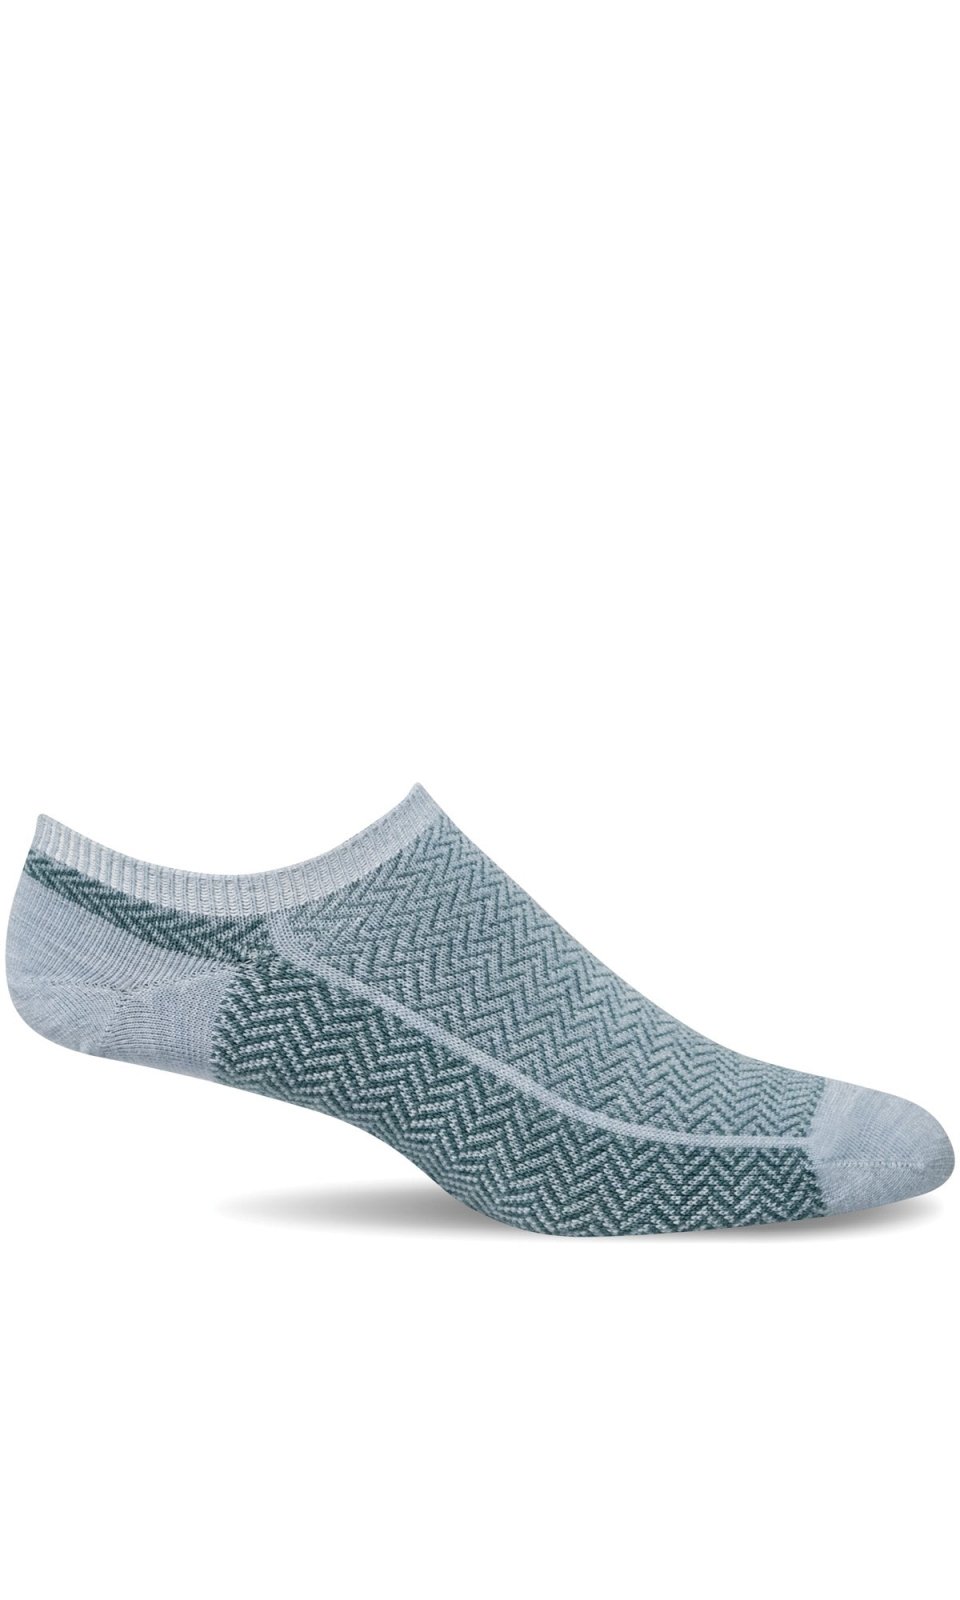 Women's Uptown | Essential Comfort Socks - Merino Wool Essential Comfort - Sockwell